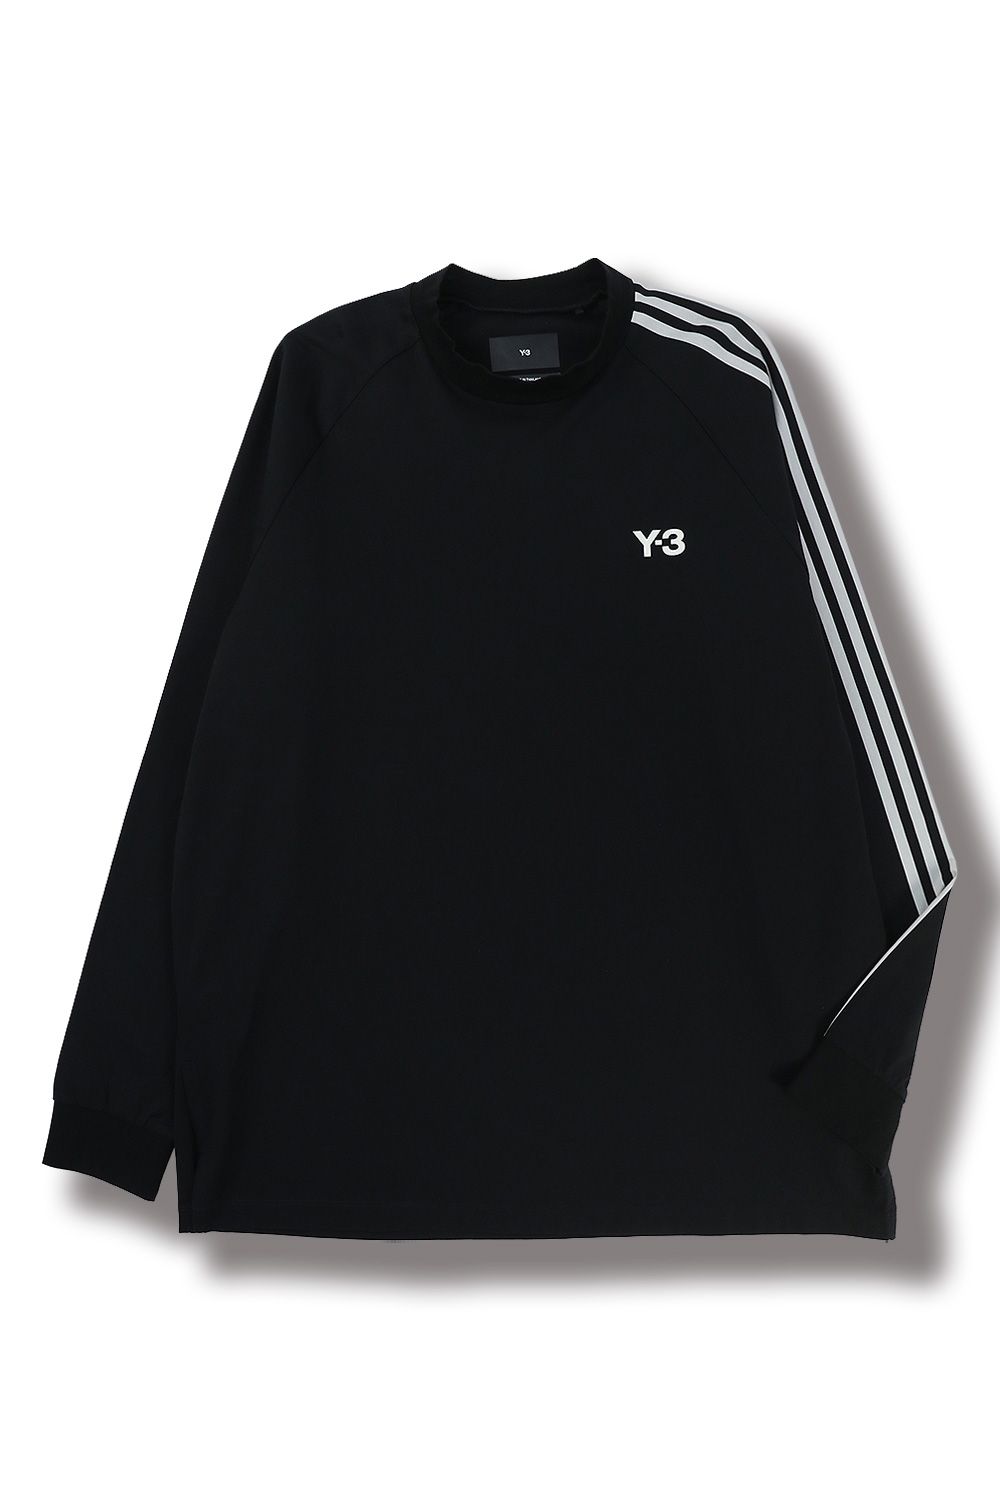 Y-3 3-STRIPES TEE 新品YOHJI YAMAMOTO Tシャツ